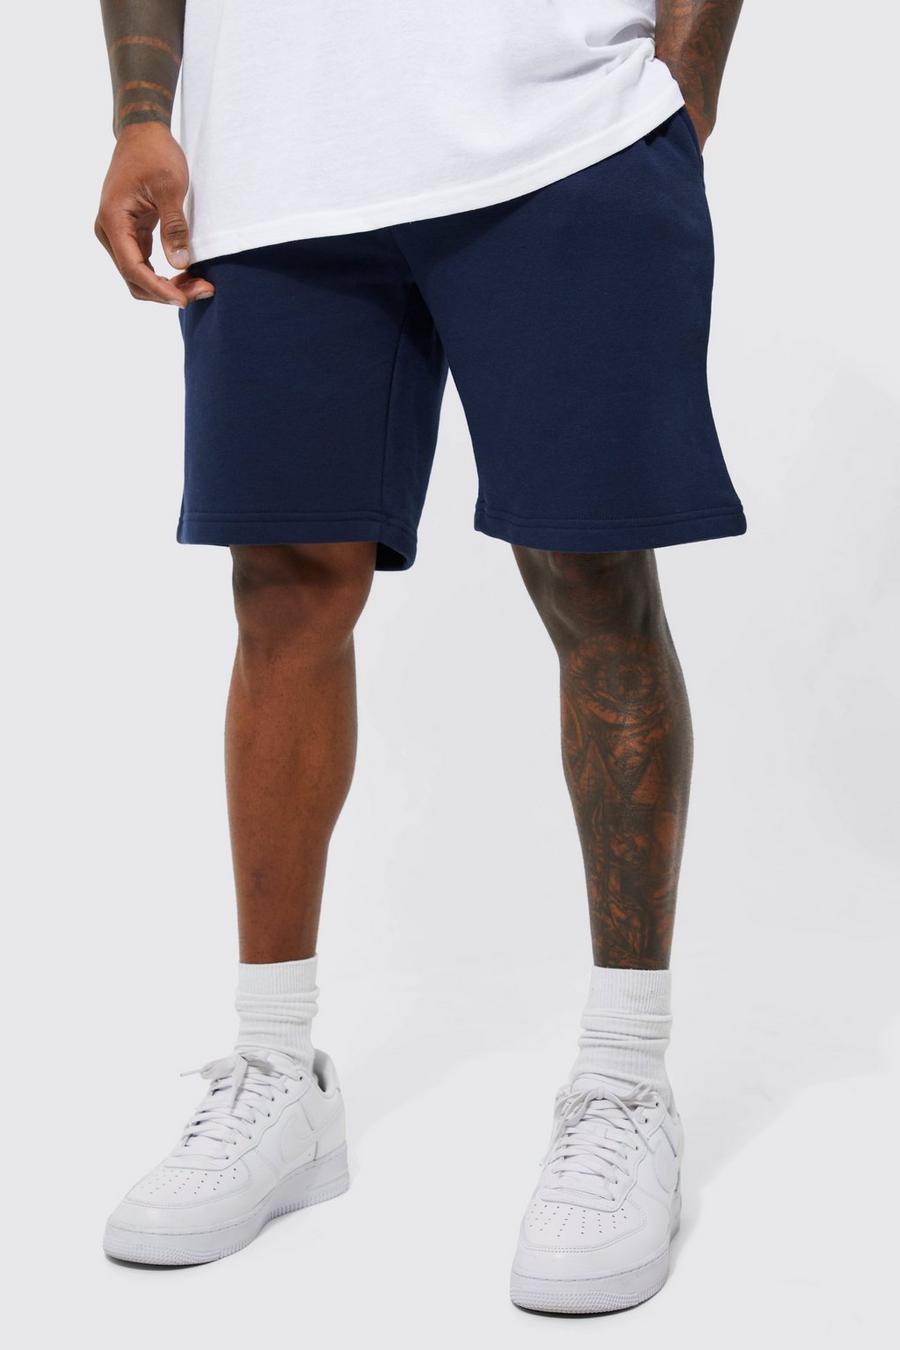 Lockere mittellange Basic Jersey-Shorts, Navy